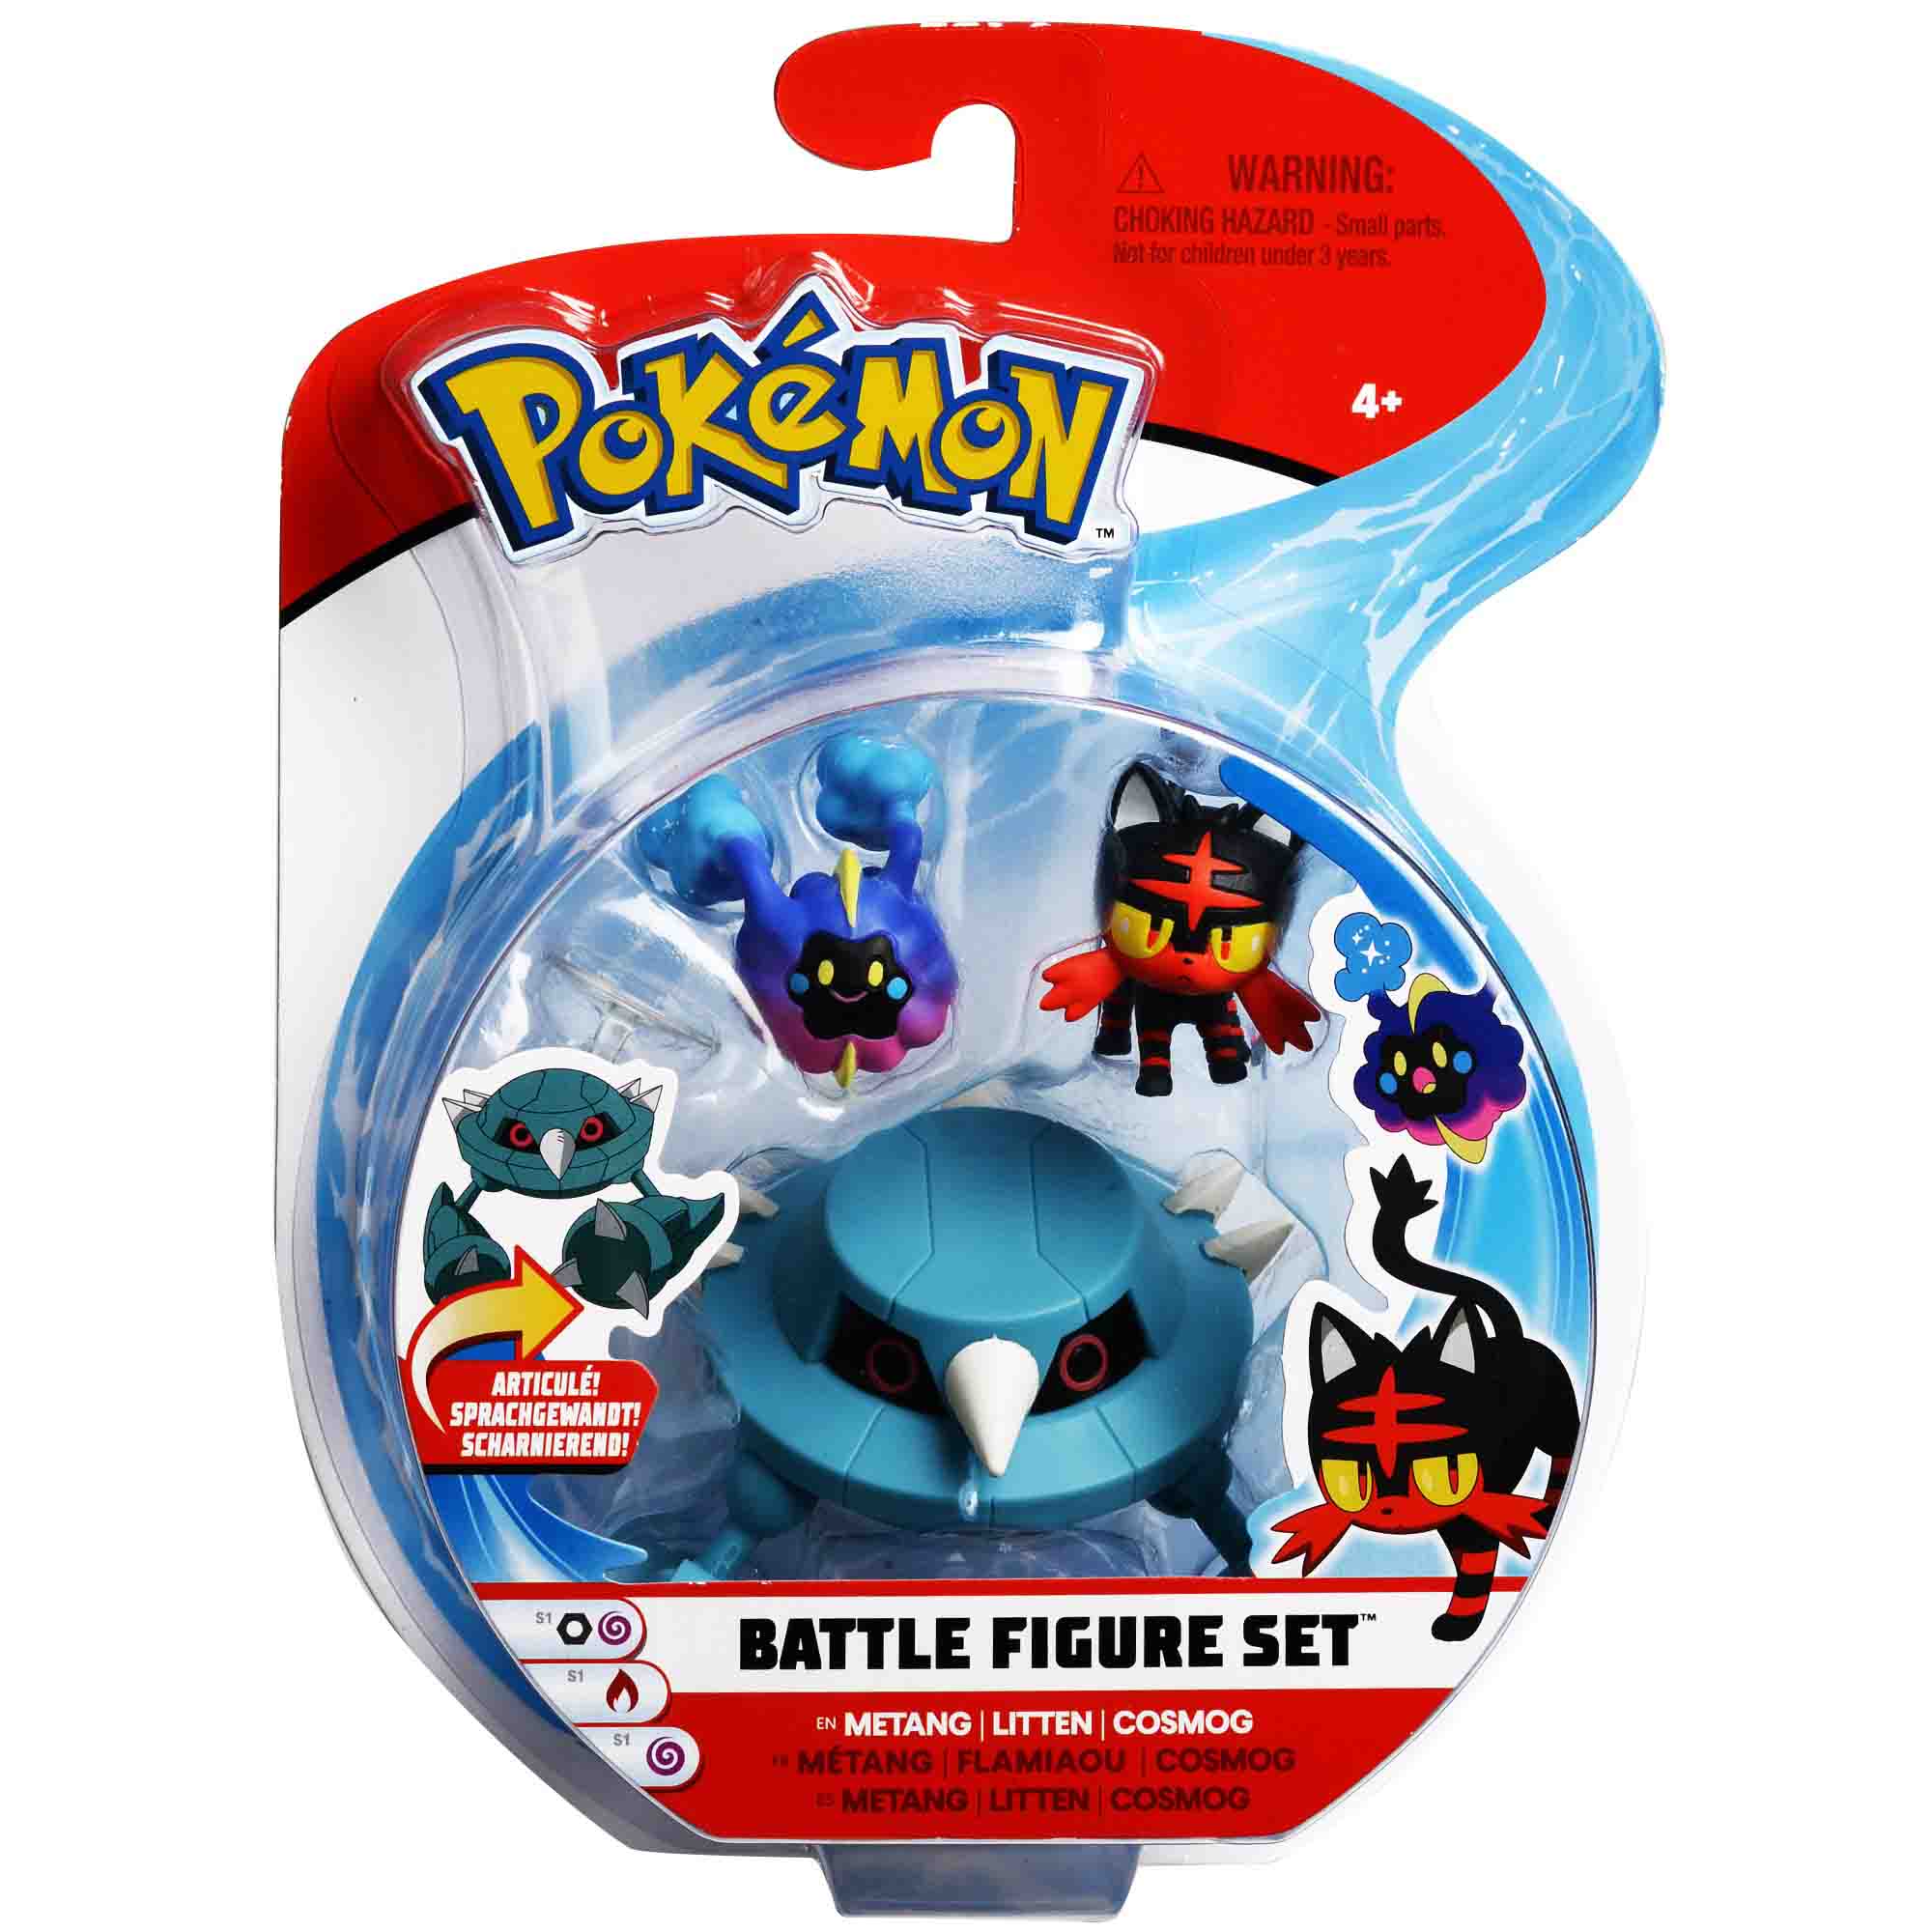 Игровой набор TM Pokemon - Литтен, Космог, Метанг, 3 фигурки  